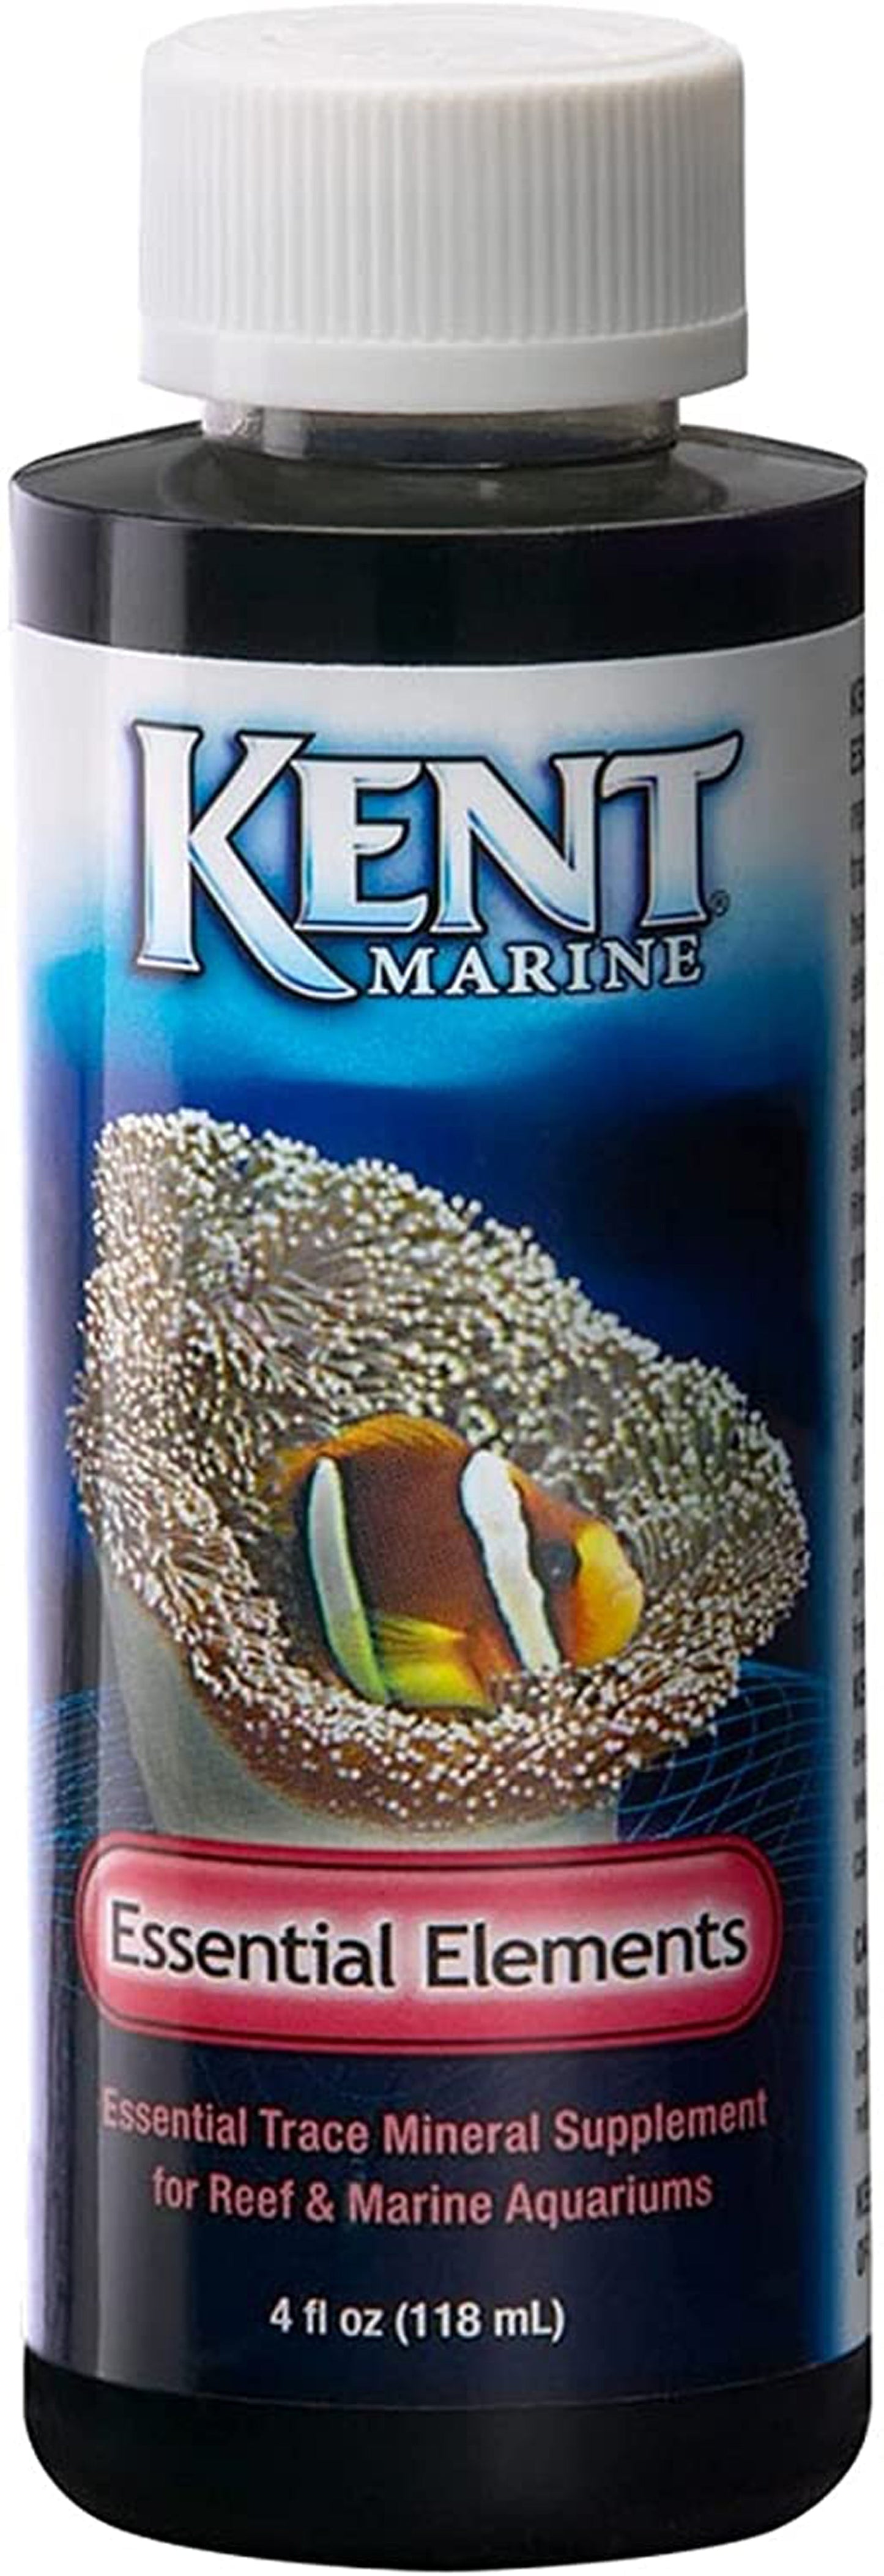 Kent Marine Essential Elements Bottle 1ea/8 fl oz